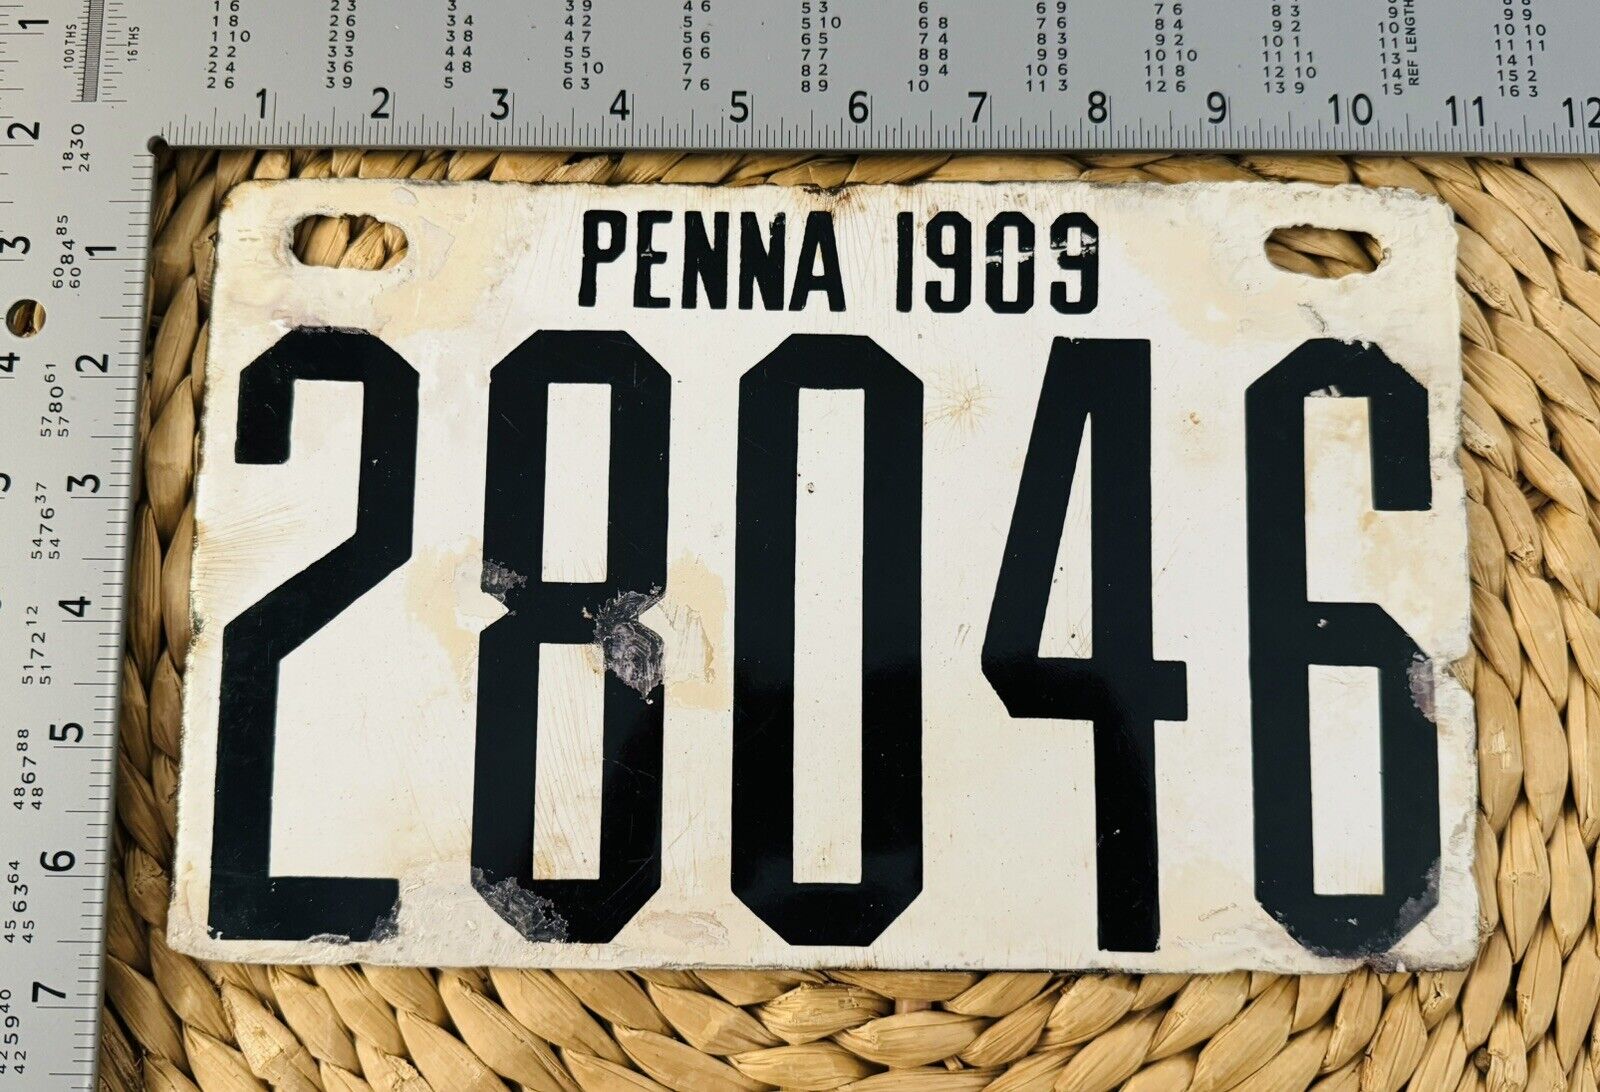 1909 Pennsylvania Porcelain License Plate 28046 ALPCA STERN CONSIGNMENT TU